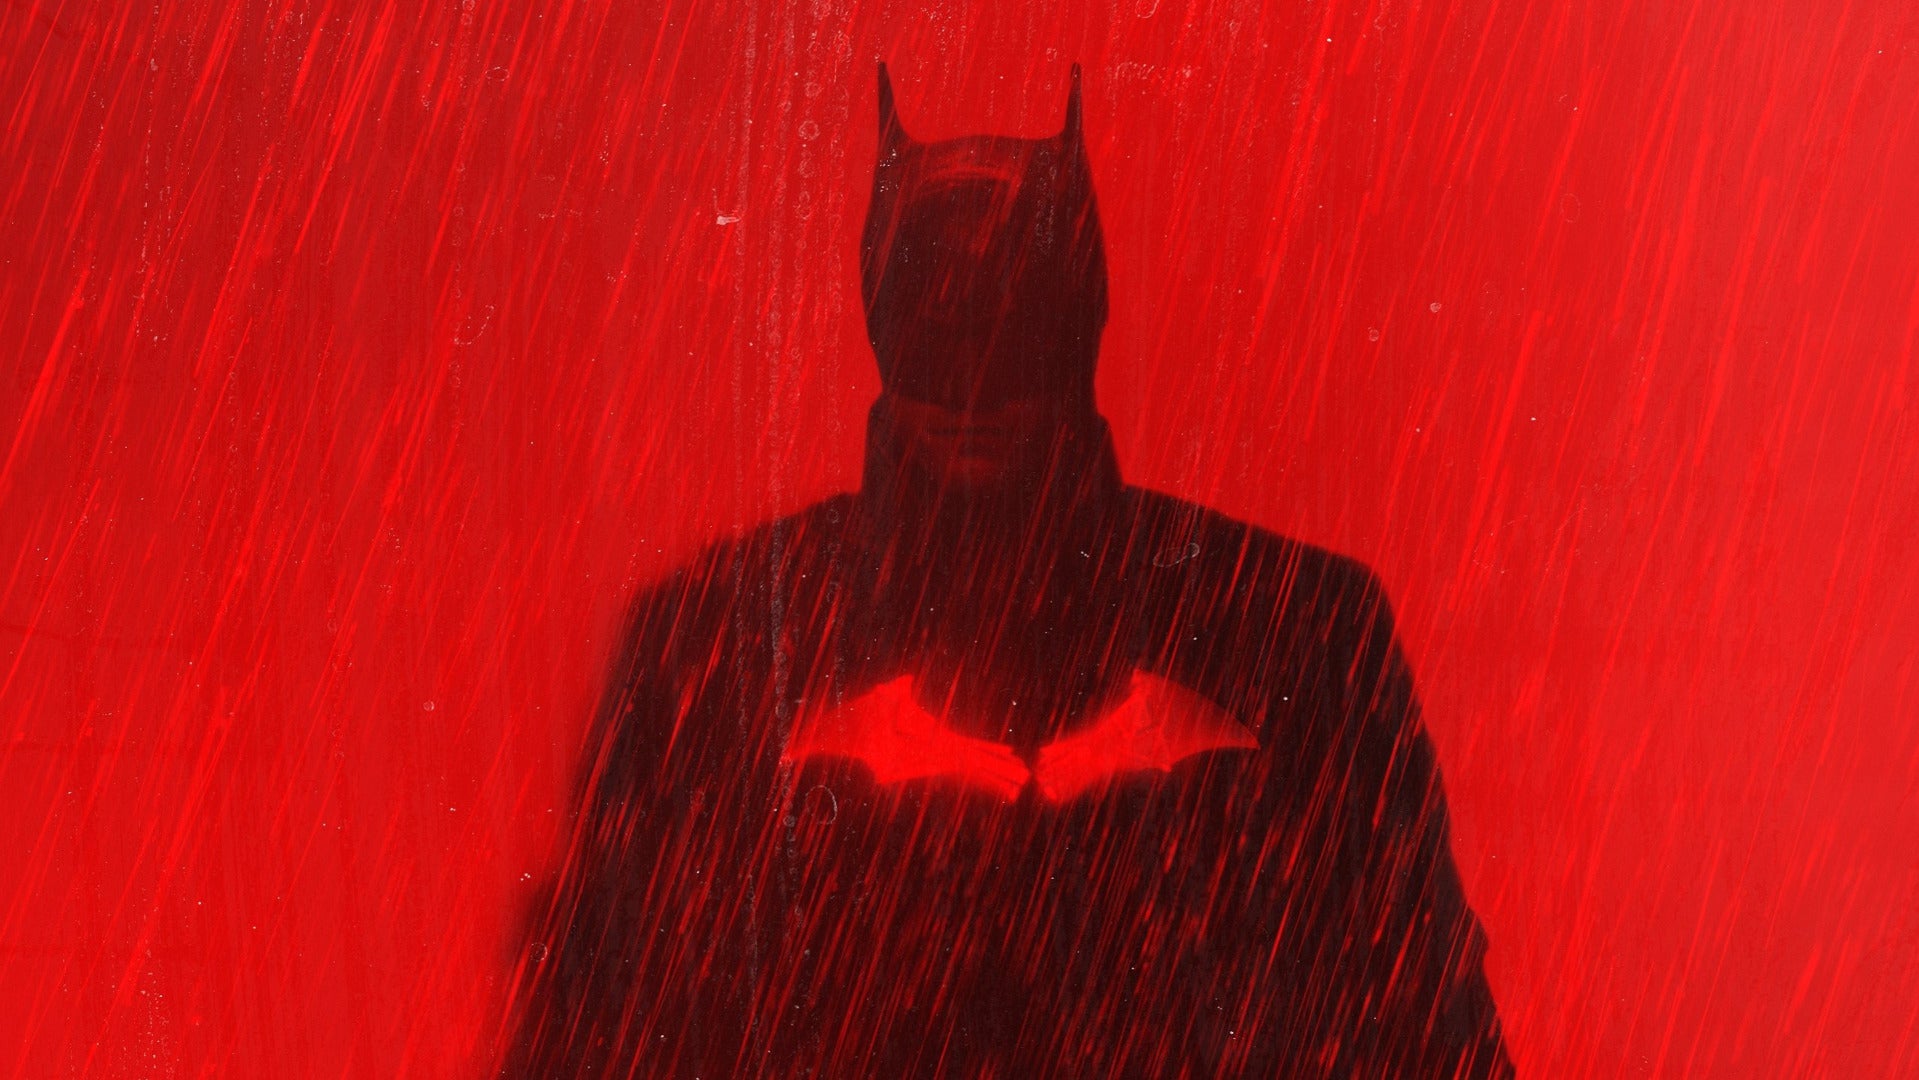 Batman | The Batmobile Documentary Livestream | Warner Bros. Entertainment